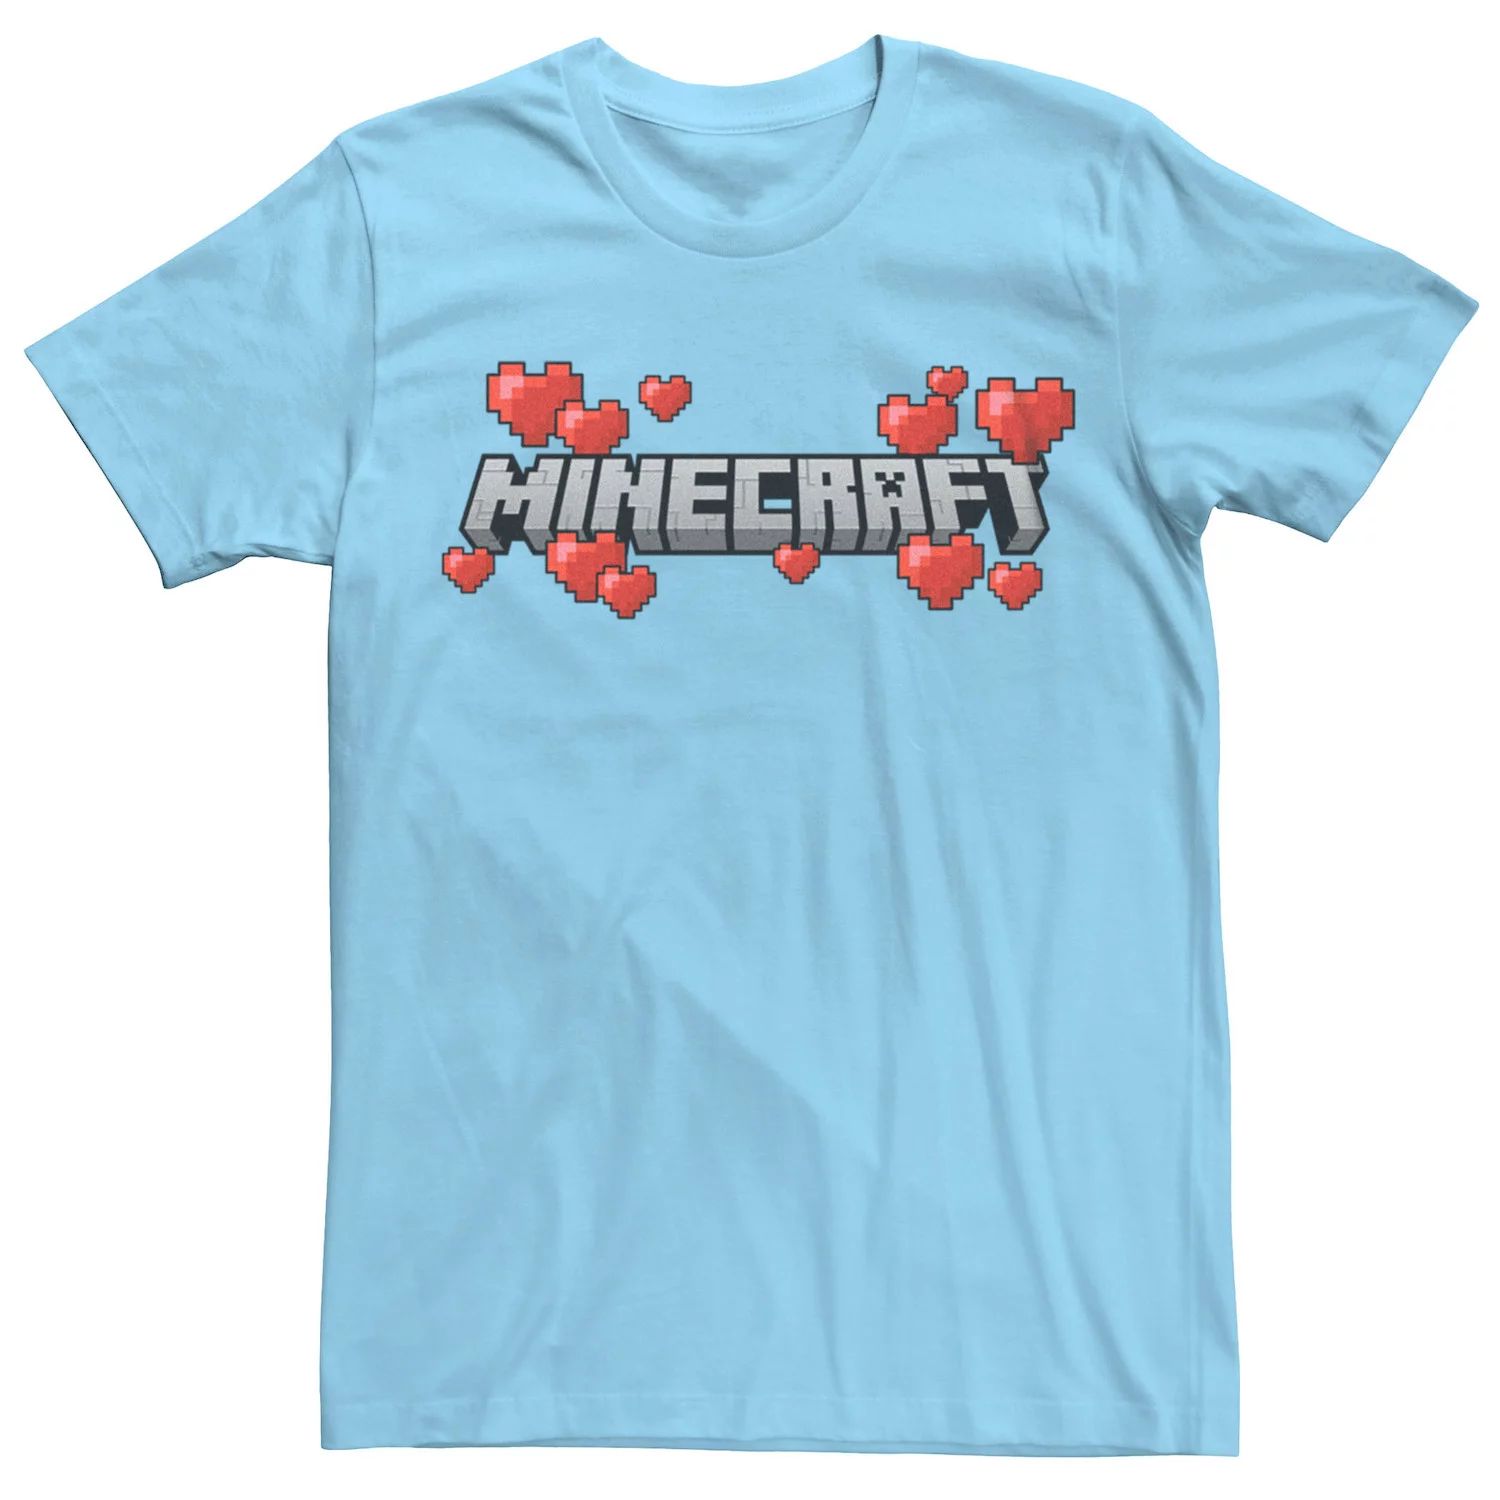 Мужская футболка с логотипом Minecraft и сердечками Licensed Character